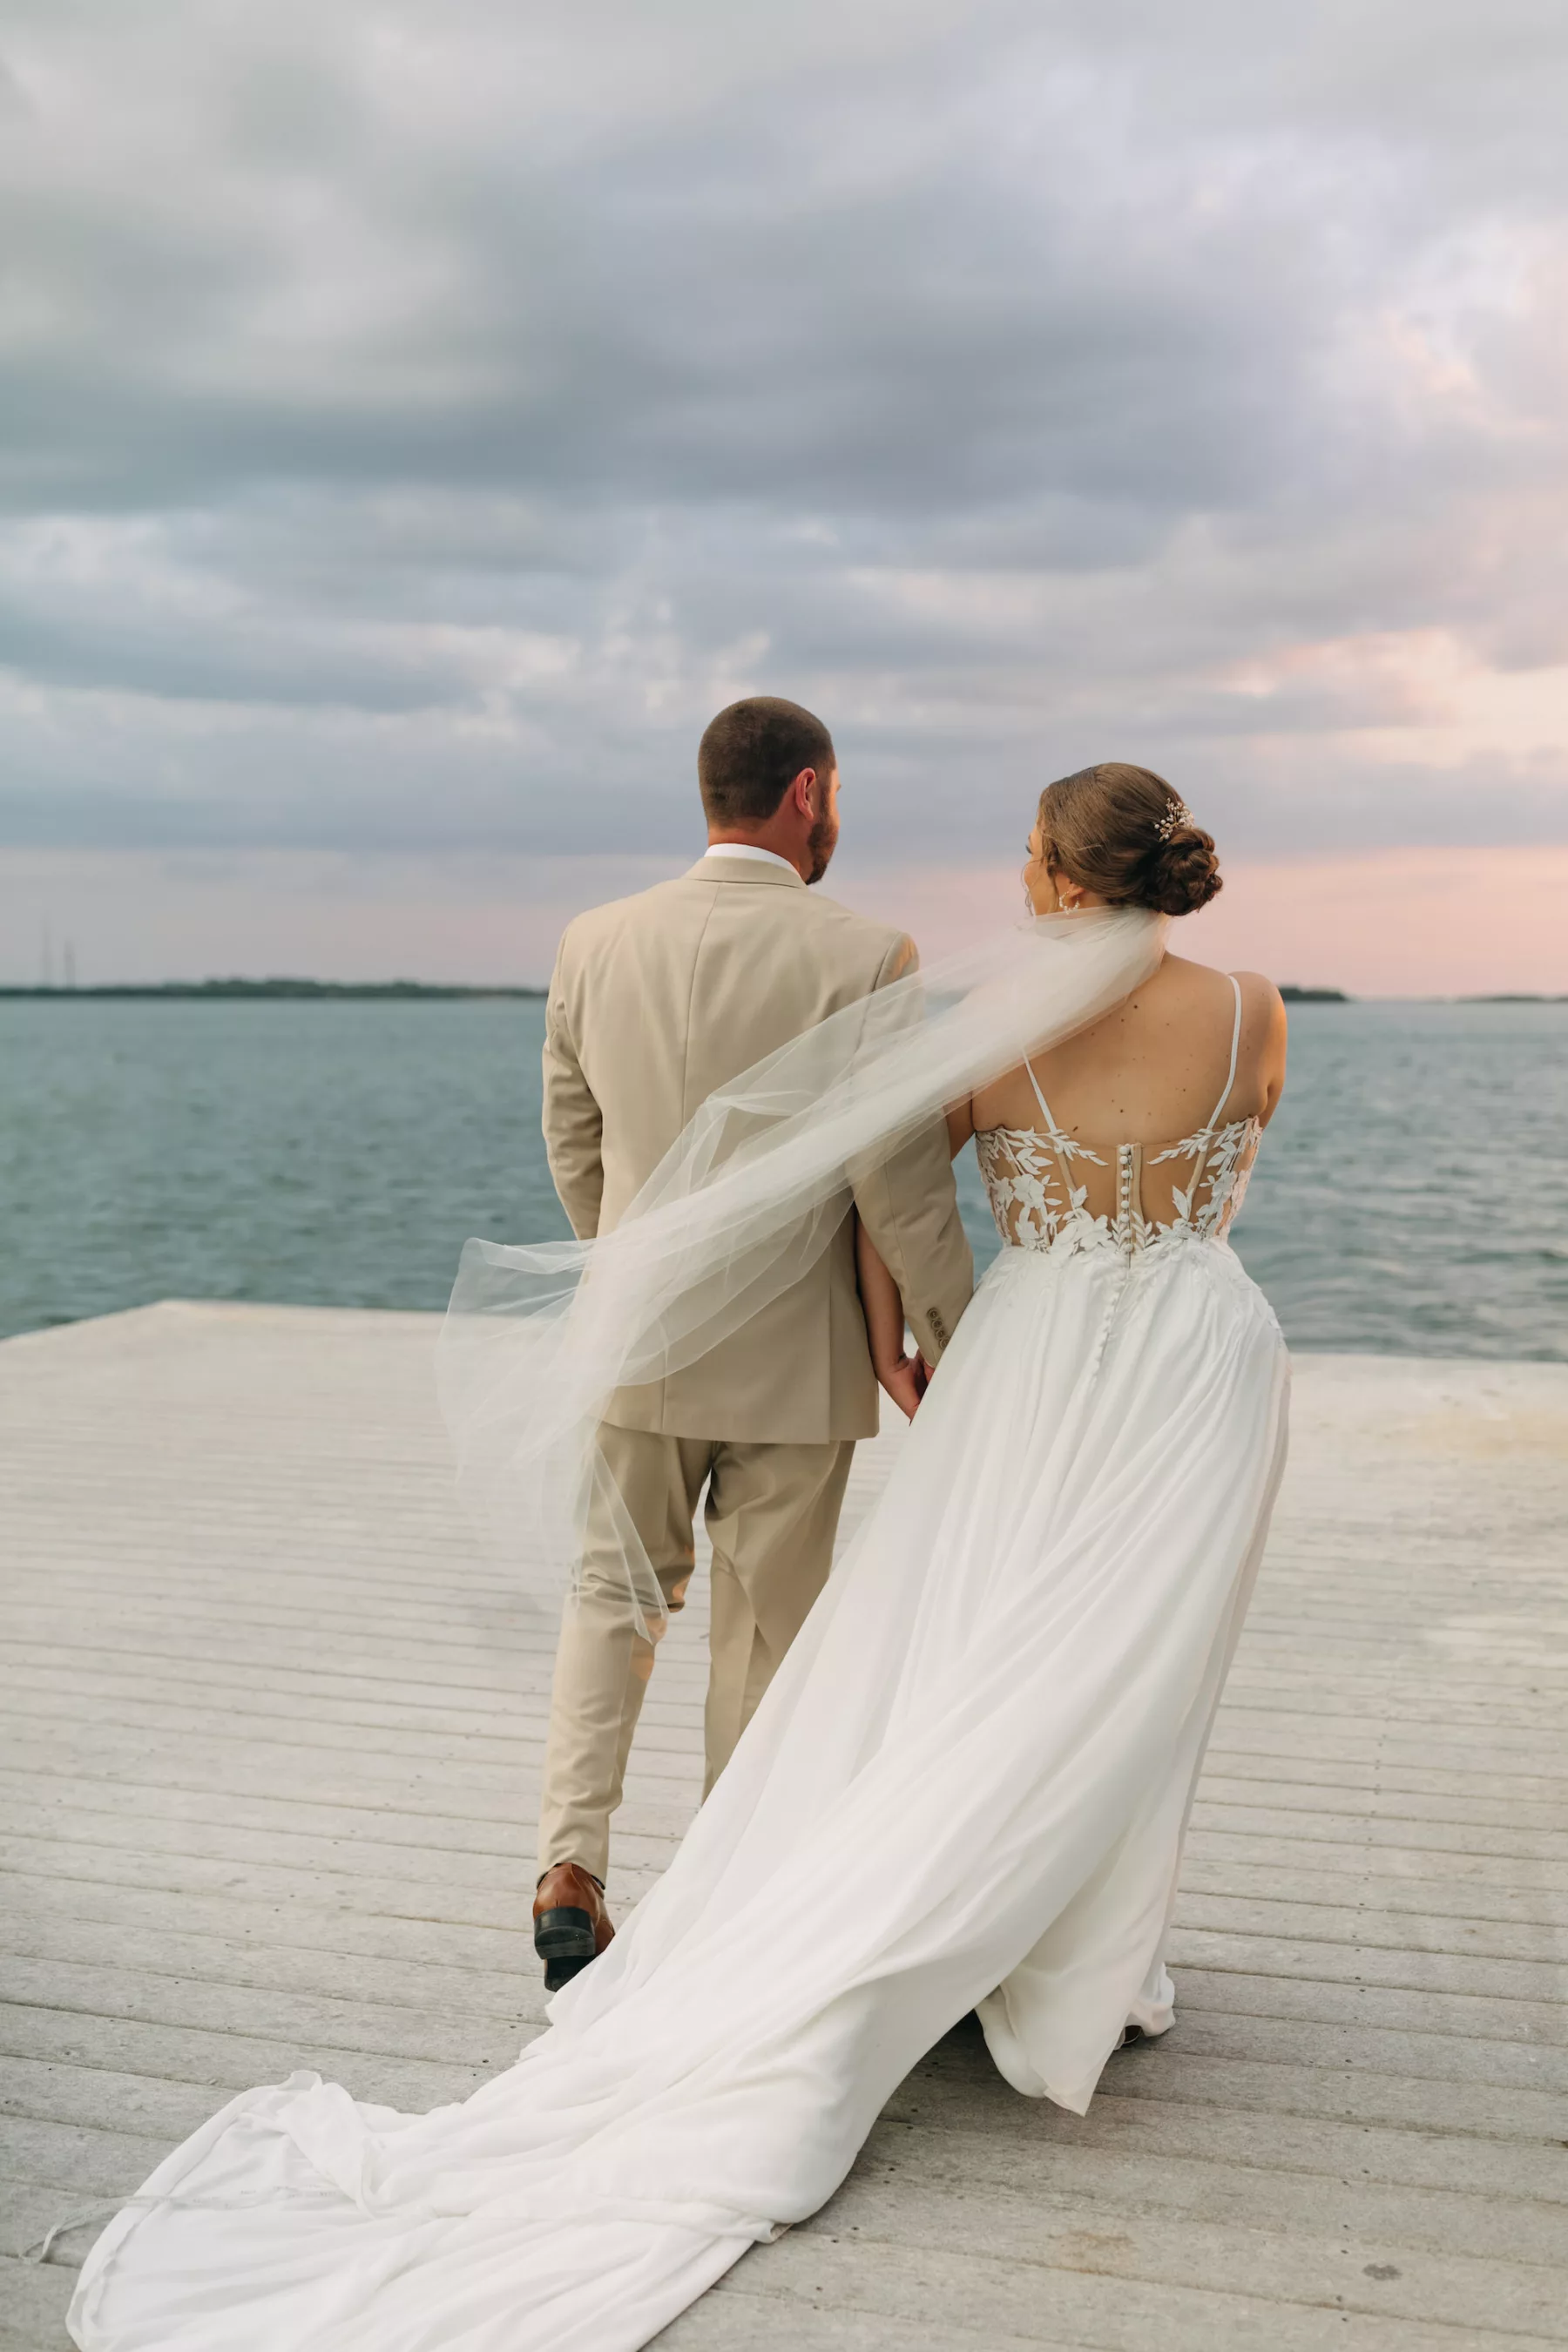 Bride and Groom Romantic Sunset Dock Wedding Portrait | St. Petersburg Photographer Amber McWhorter Photography